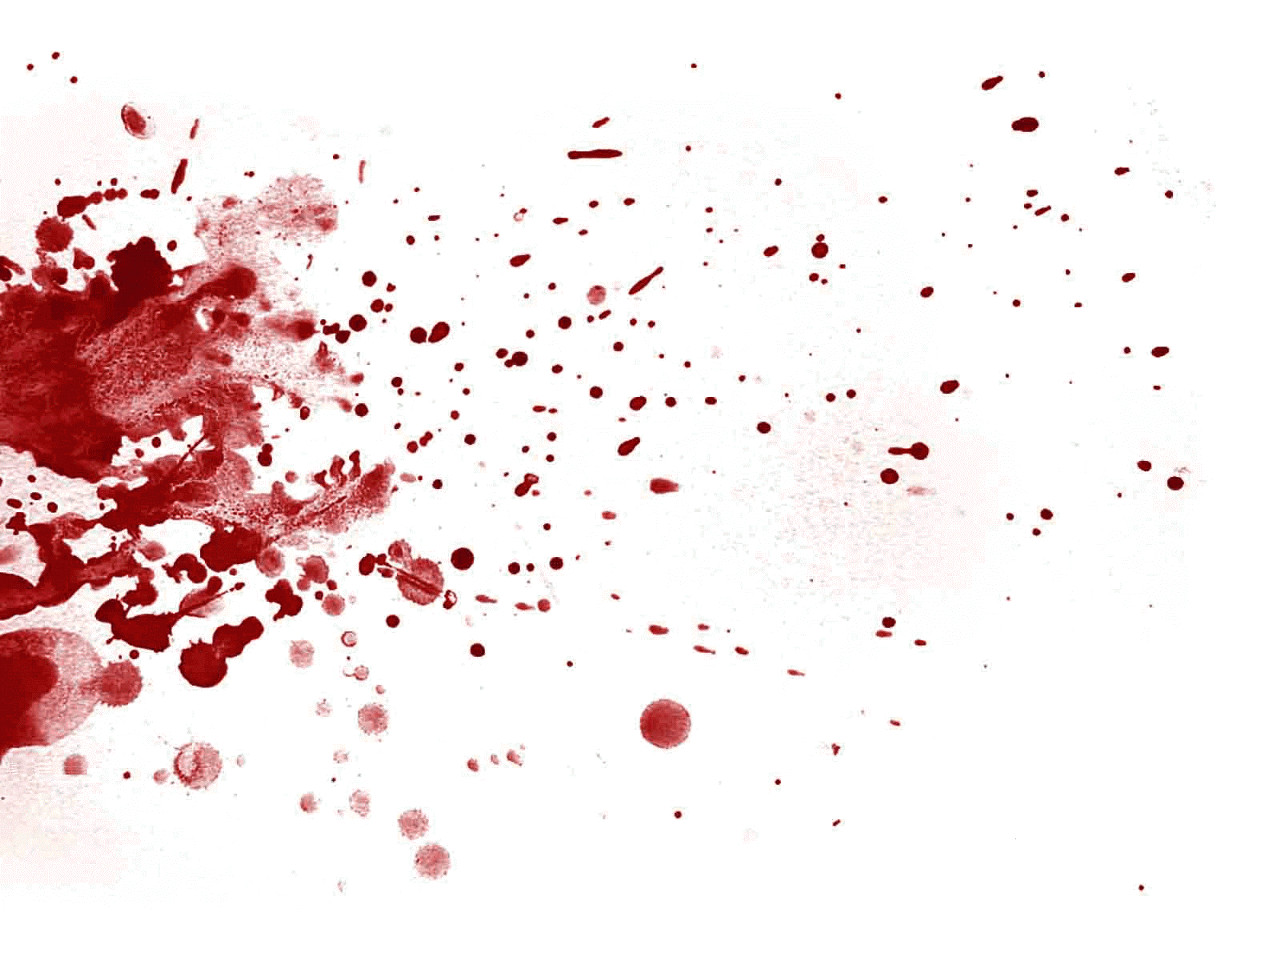 Blood Splatter Powerpoint Templates Blood Spatter Wallpaper Wallpapersafari